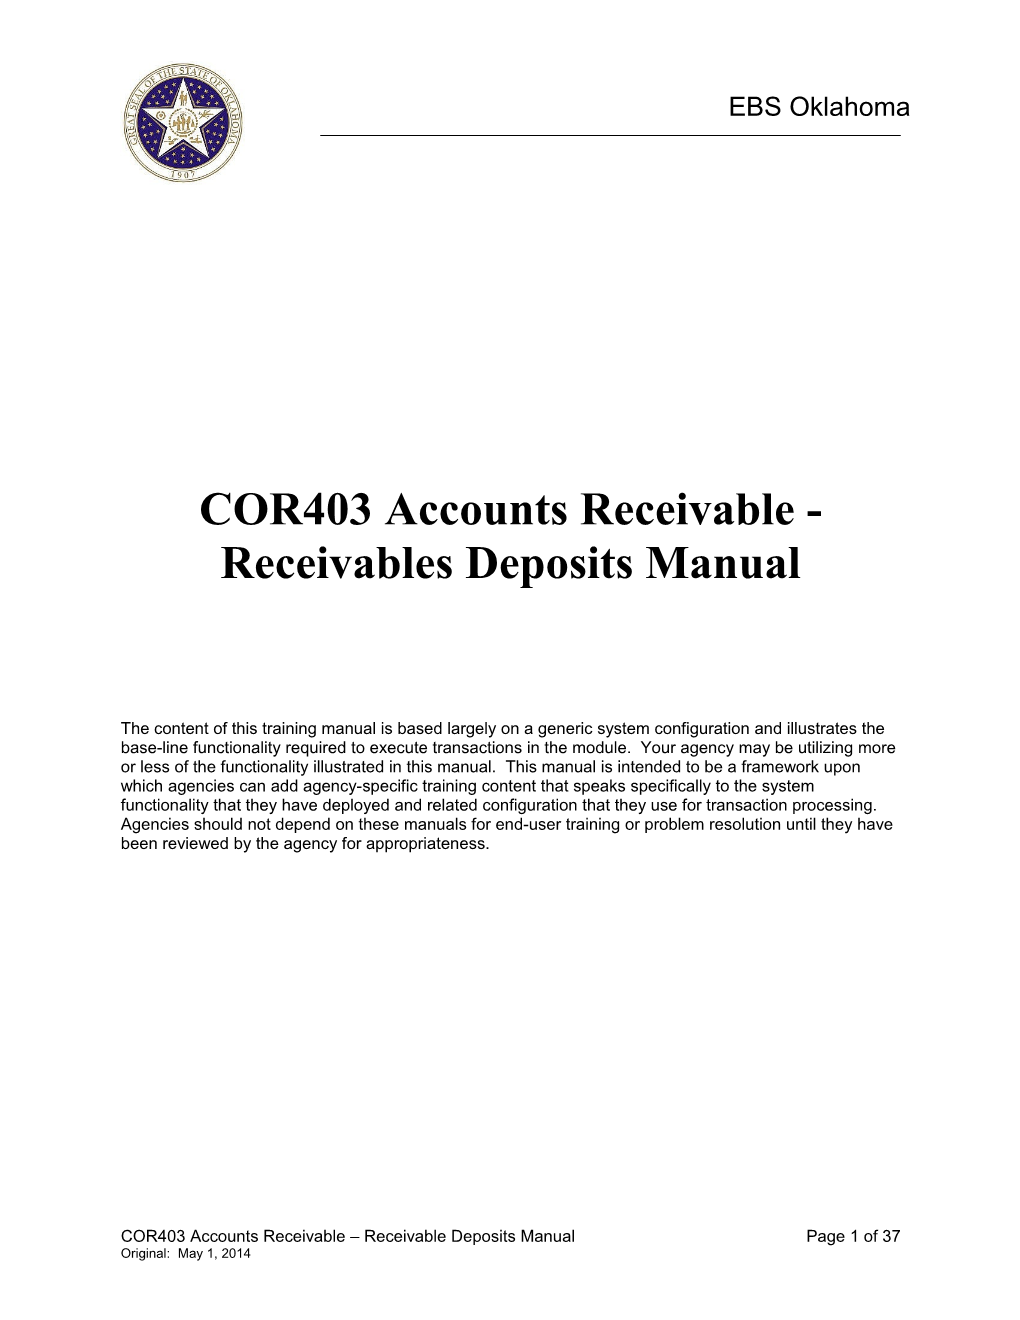 COR402 - Accounts Receivable -Receivables Deposits Manual